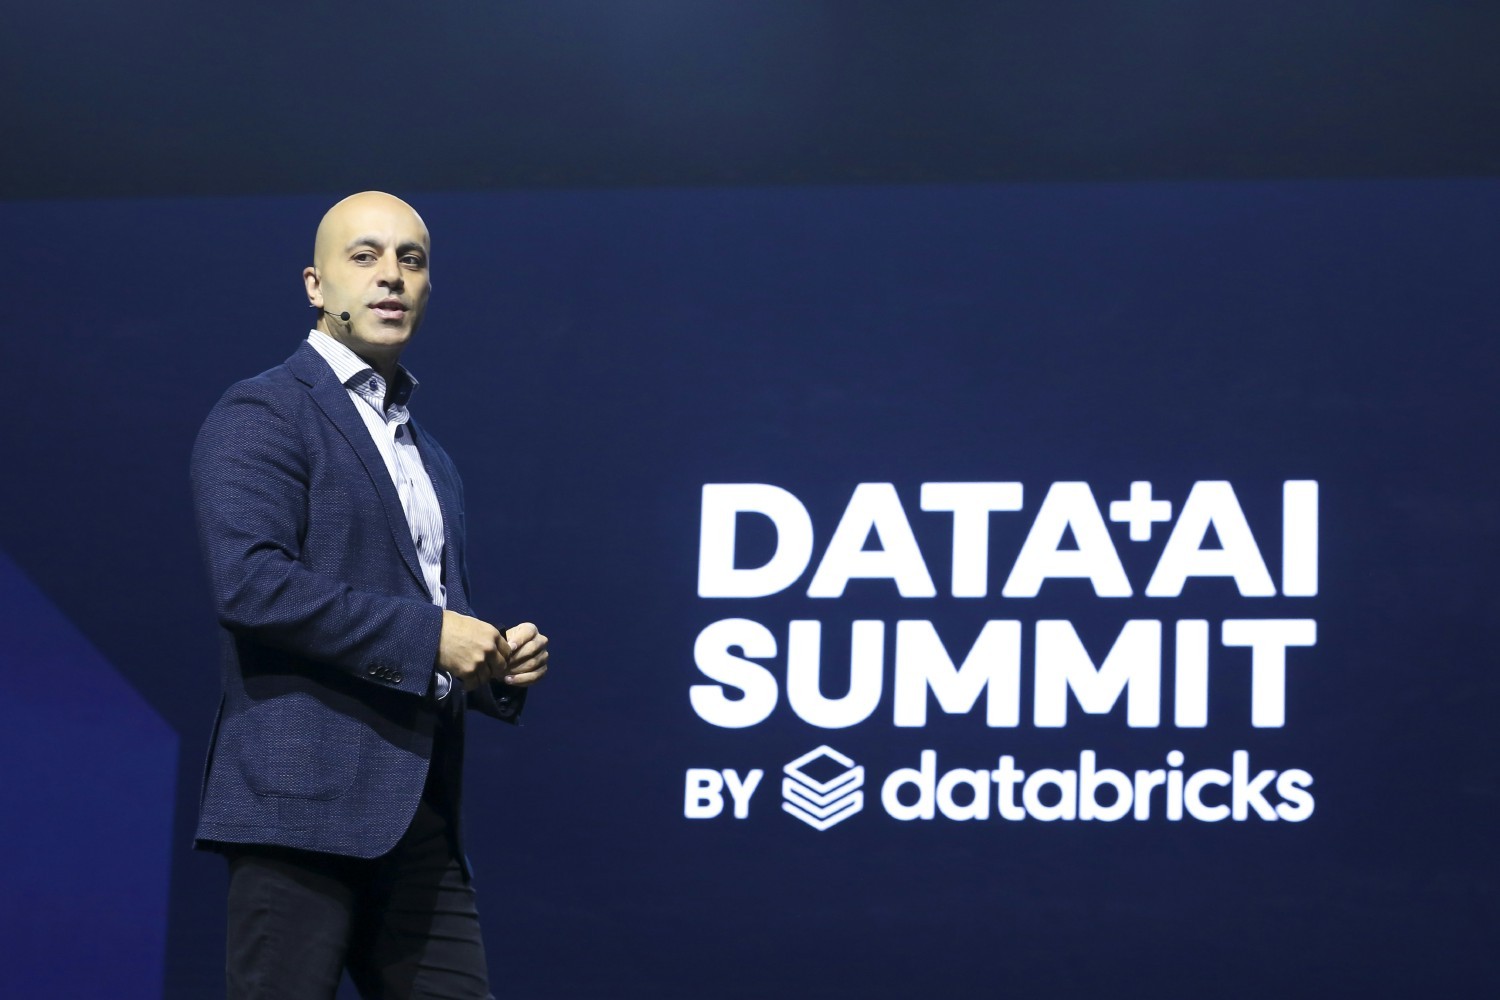 Databricks Co-founder and CEO, Ali Ghodsi